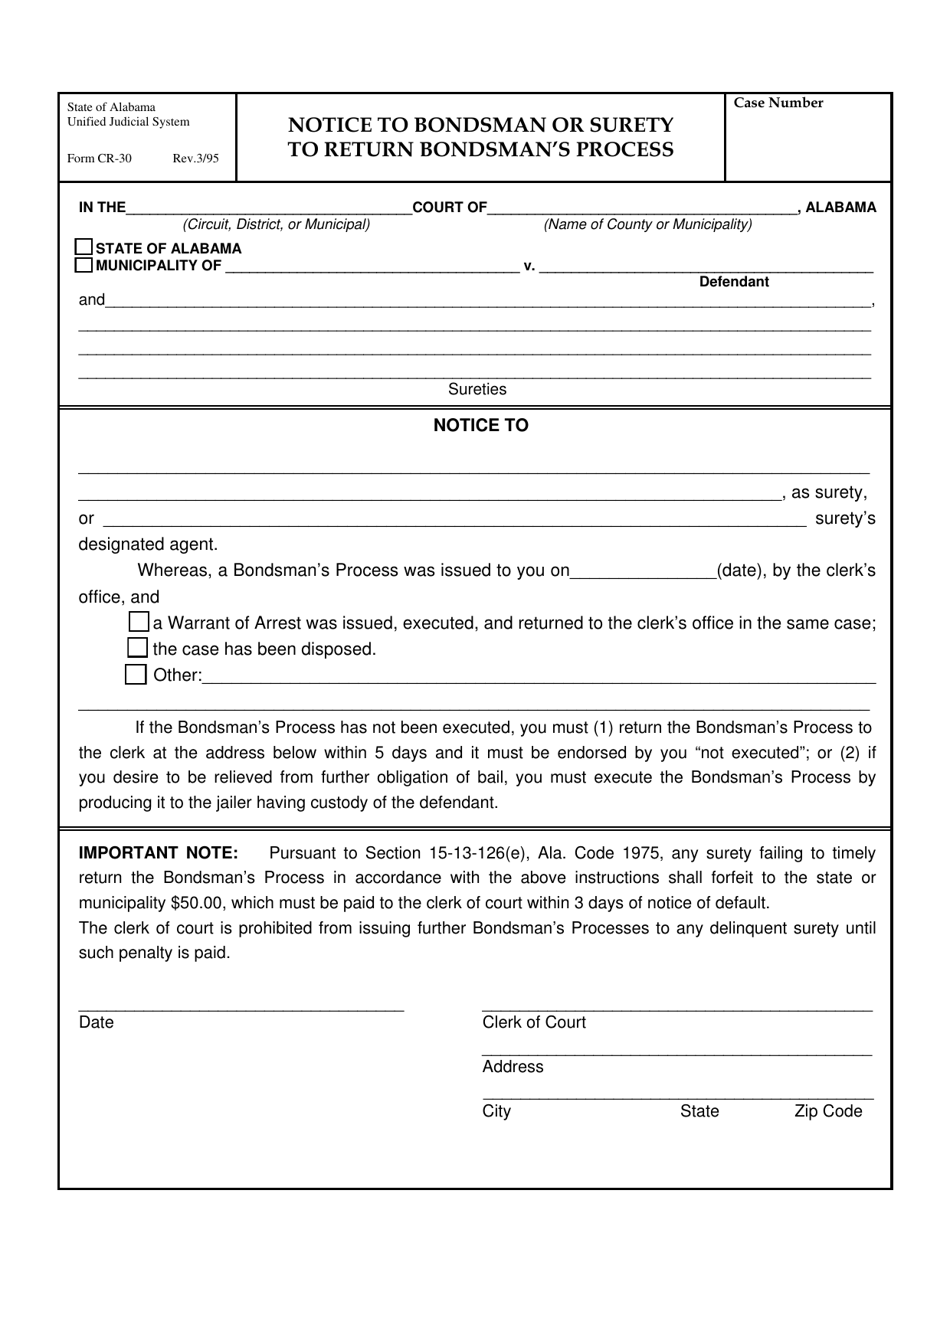 Form CR-30 Notice to Bondsman or Surety to Return Bondsmans Process - Alabama, Page 1